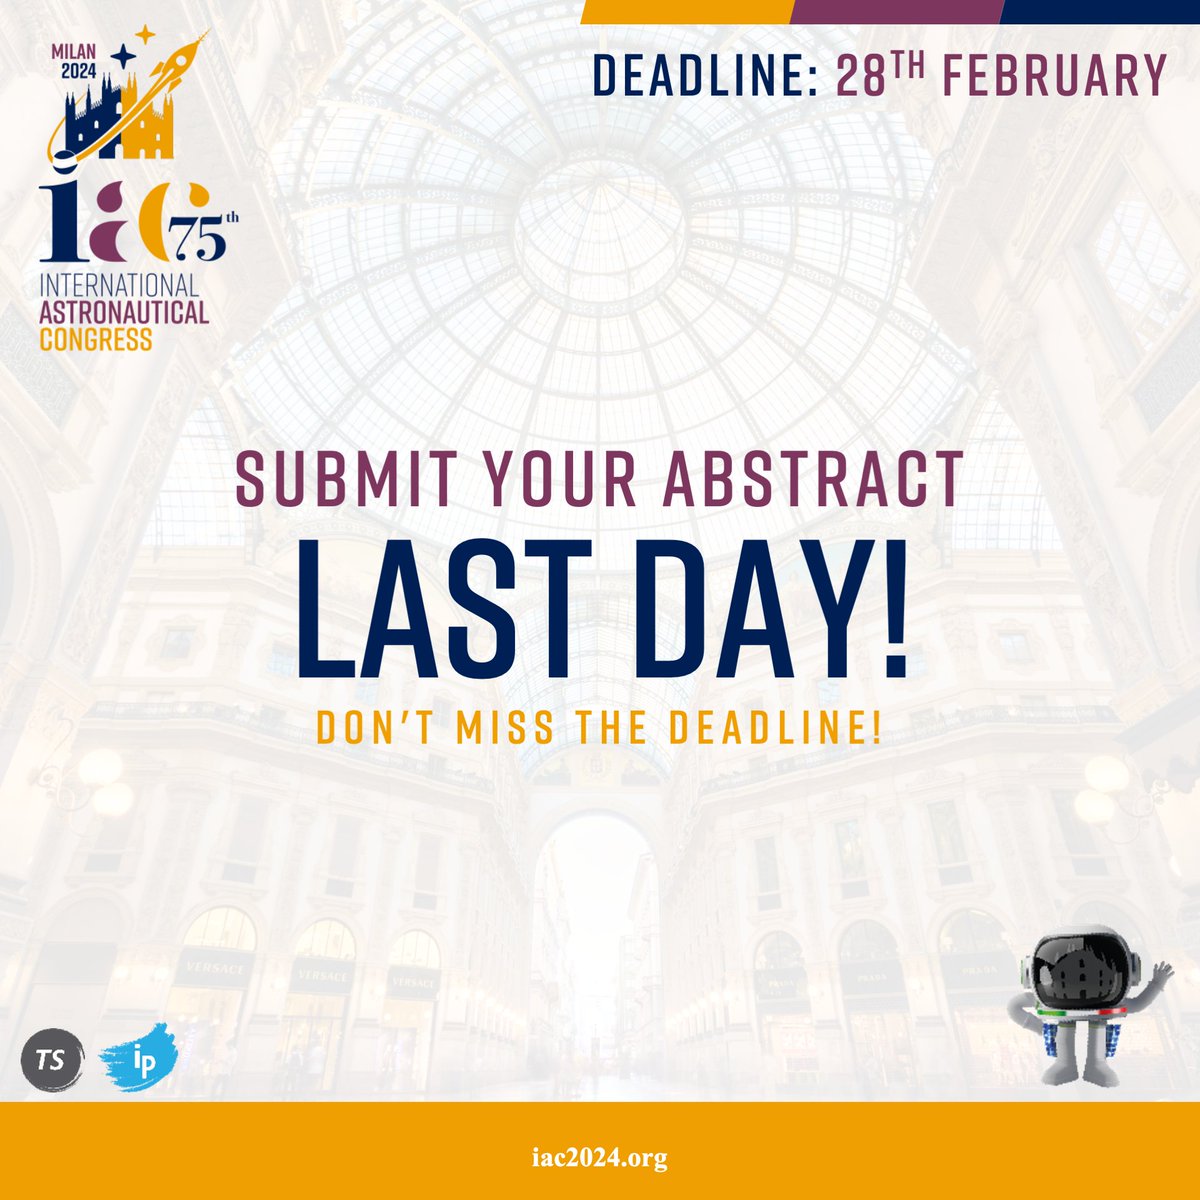 LAST DAY! 📆
Submit your abstract by tomorrow at iafastro.directory/iac/account/lo…

#IAC2024 #SpaceCongress #CallForAbstract #SpaceSustainability
@iafastro @aidaaitaly @ASI_spazio @Leonardo_live @telespazio